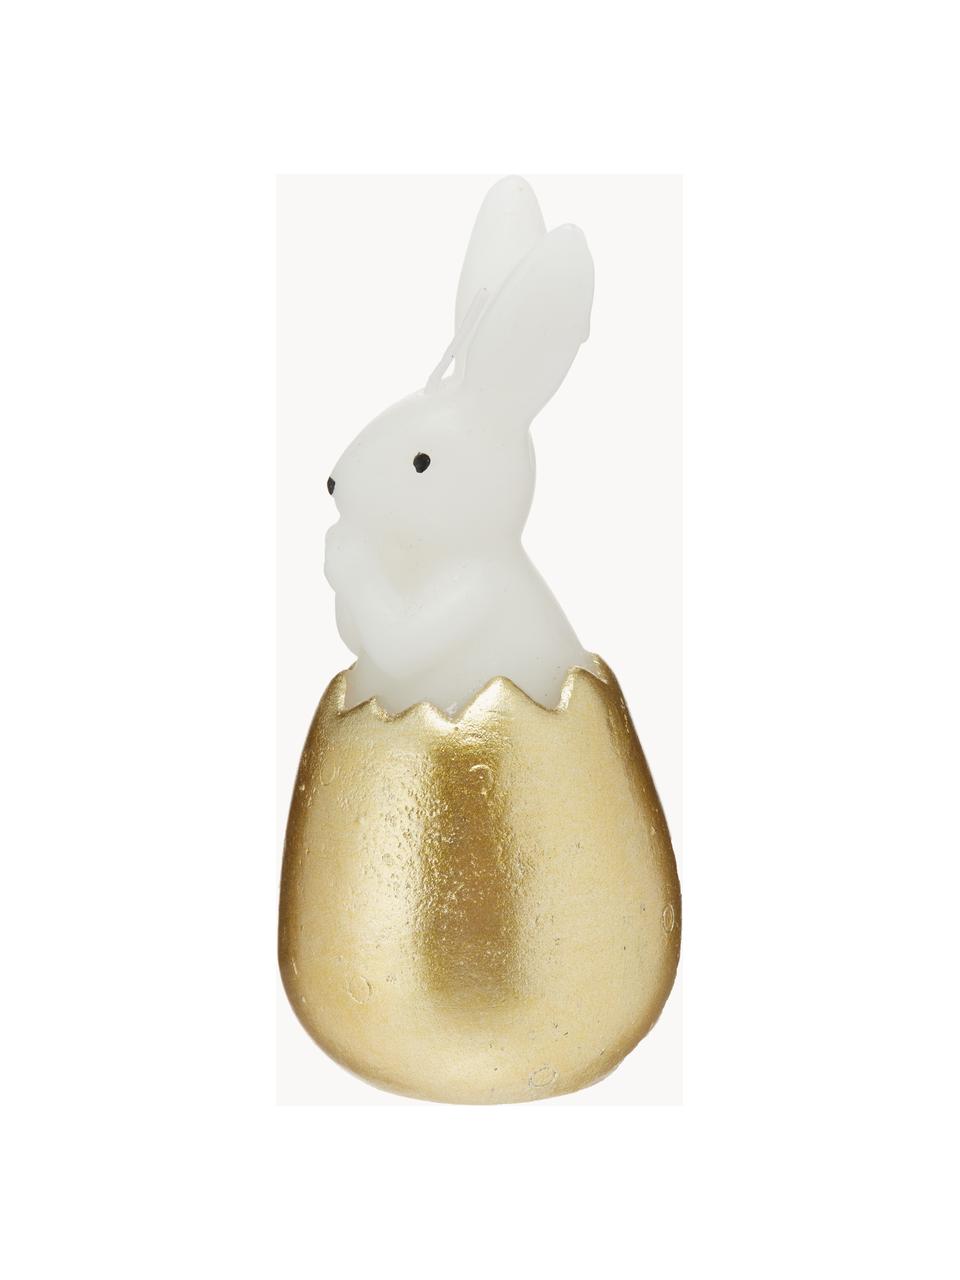 Deko-Kerze Bunny, Wachs, Weiss, Goldfarben, Ø 6 x H 13 cm